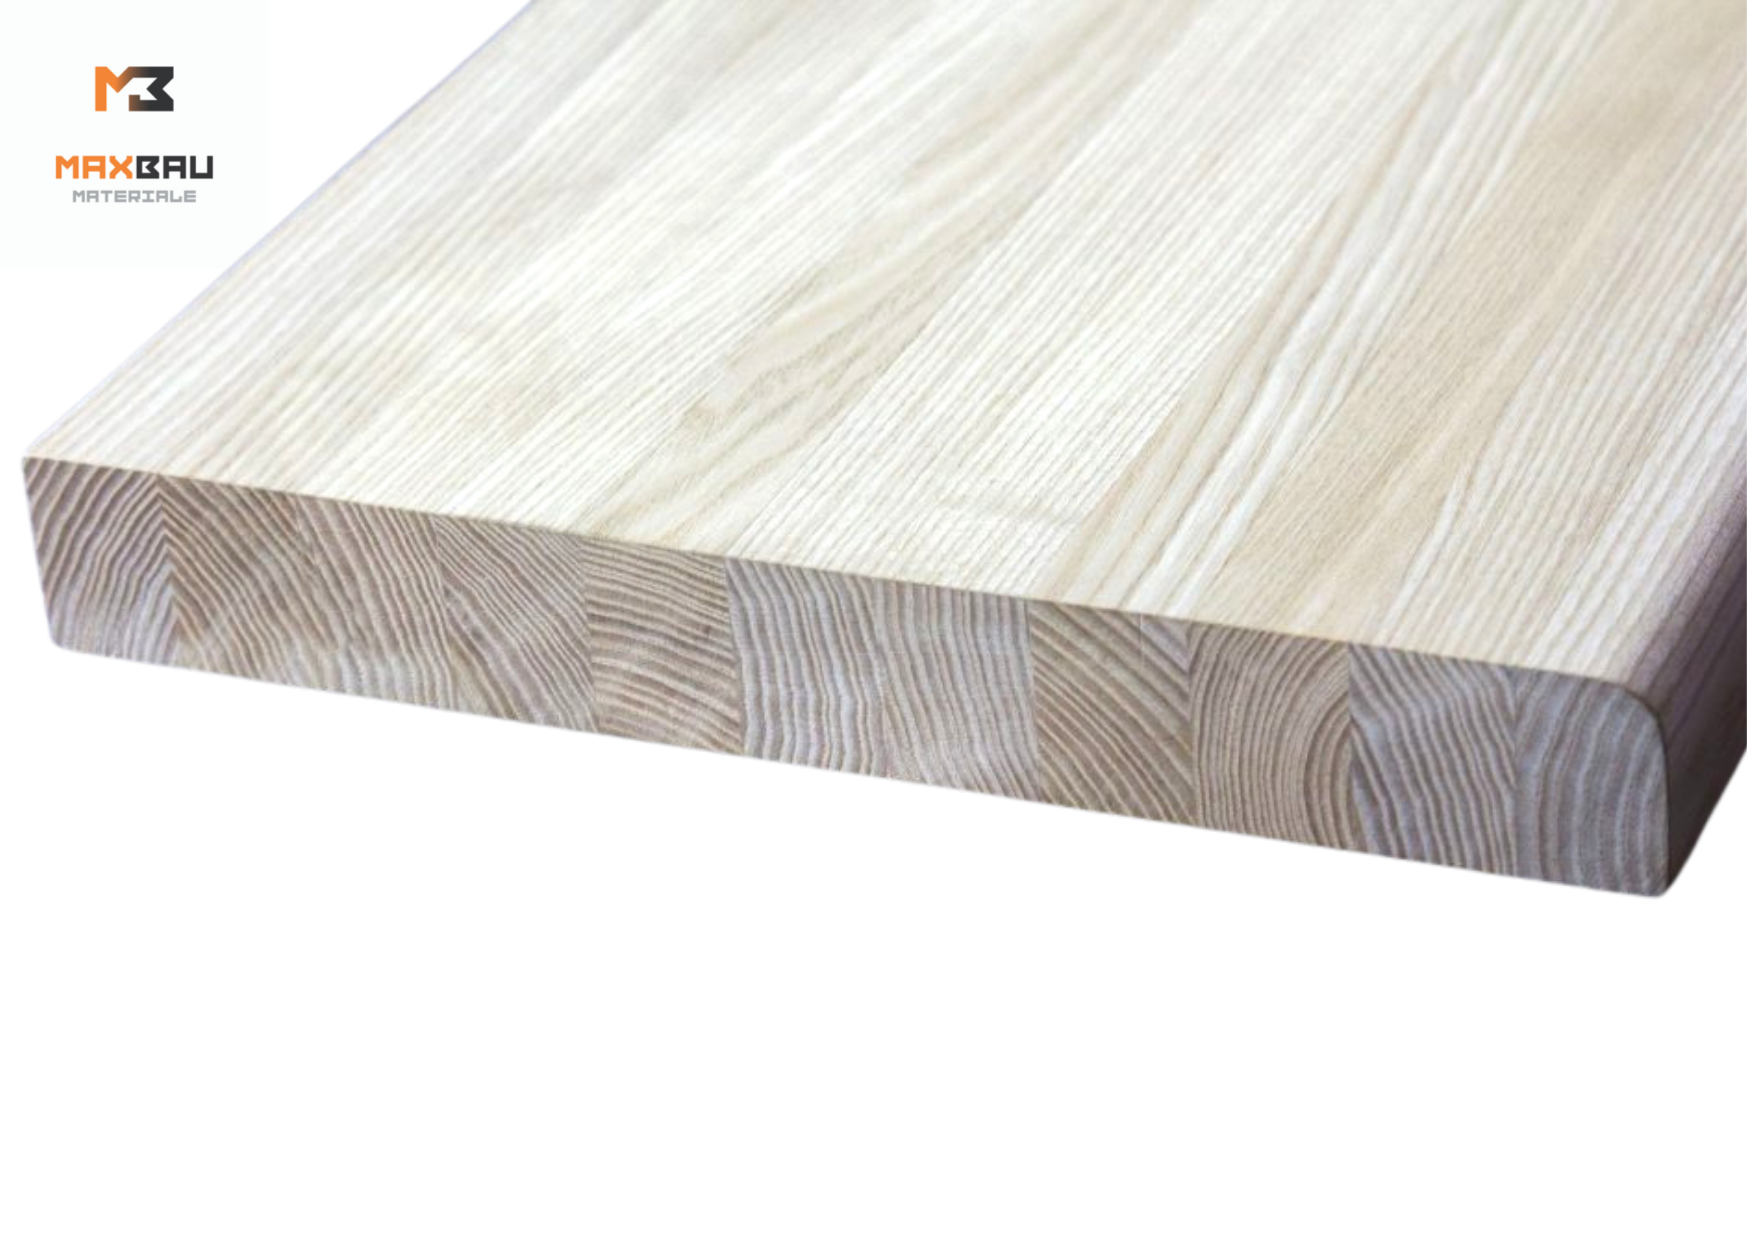 Placi din lemn incleiat - Placa de lemn incleiat MaxBau 2000 x 300 x 28 mm Clasa AB, https:maxbau.ro